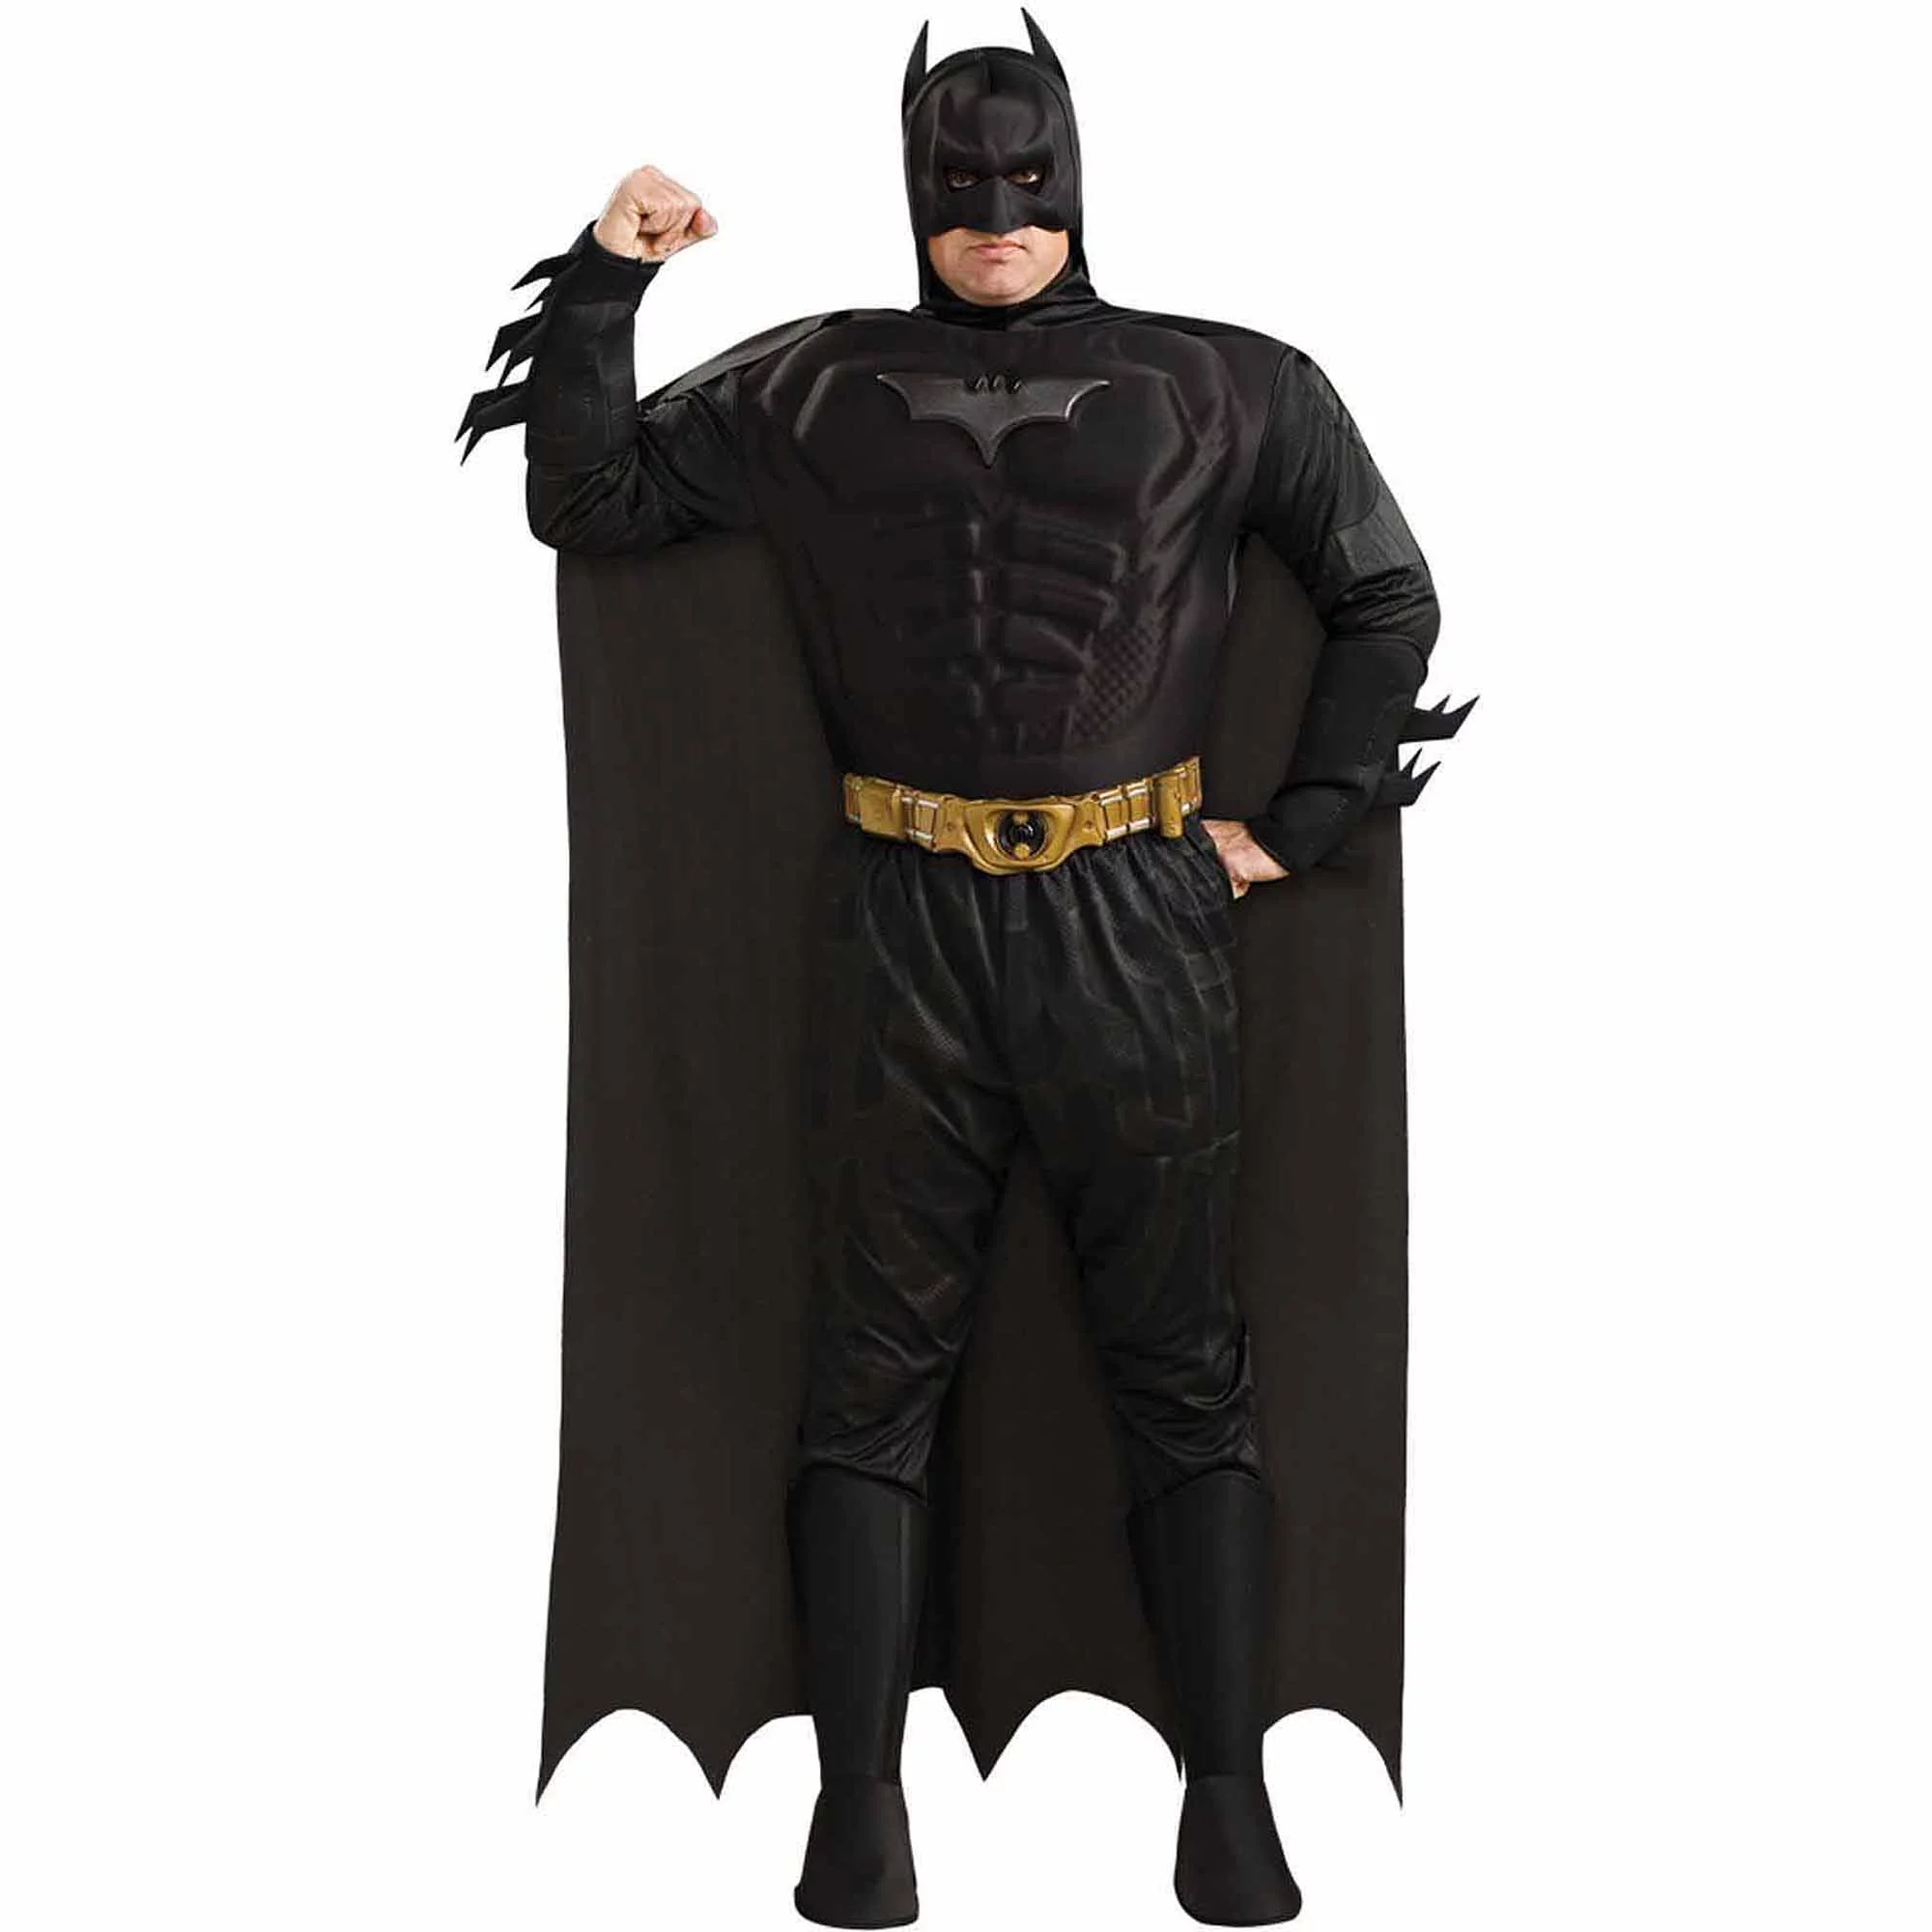 Batman The Dark Knight Rises Muscle Chest Men's Halloween Fancy-Dress Costume for Adult, Plus Size